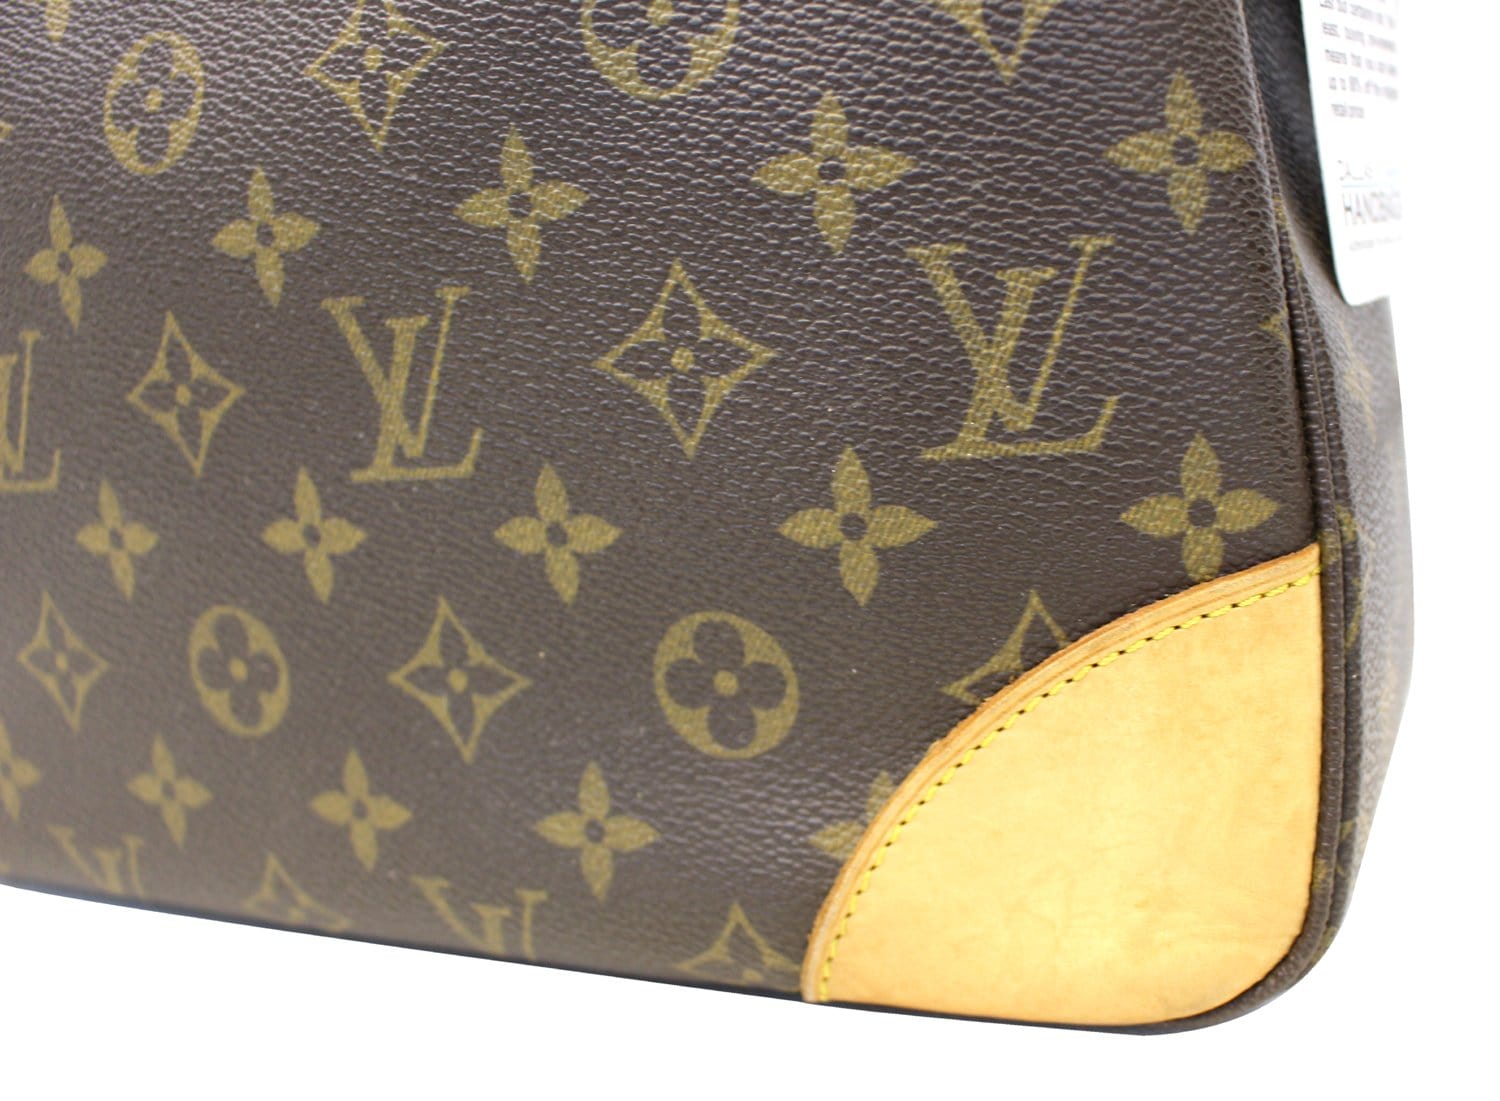 Authentic Louis Vuitton Monogram - Bagful of Goodies